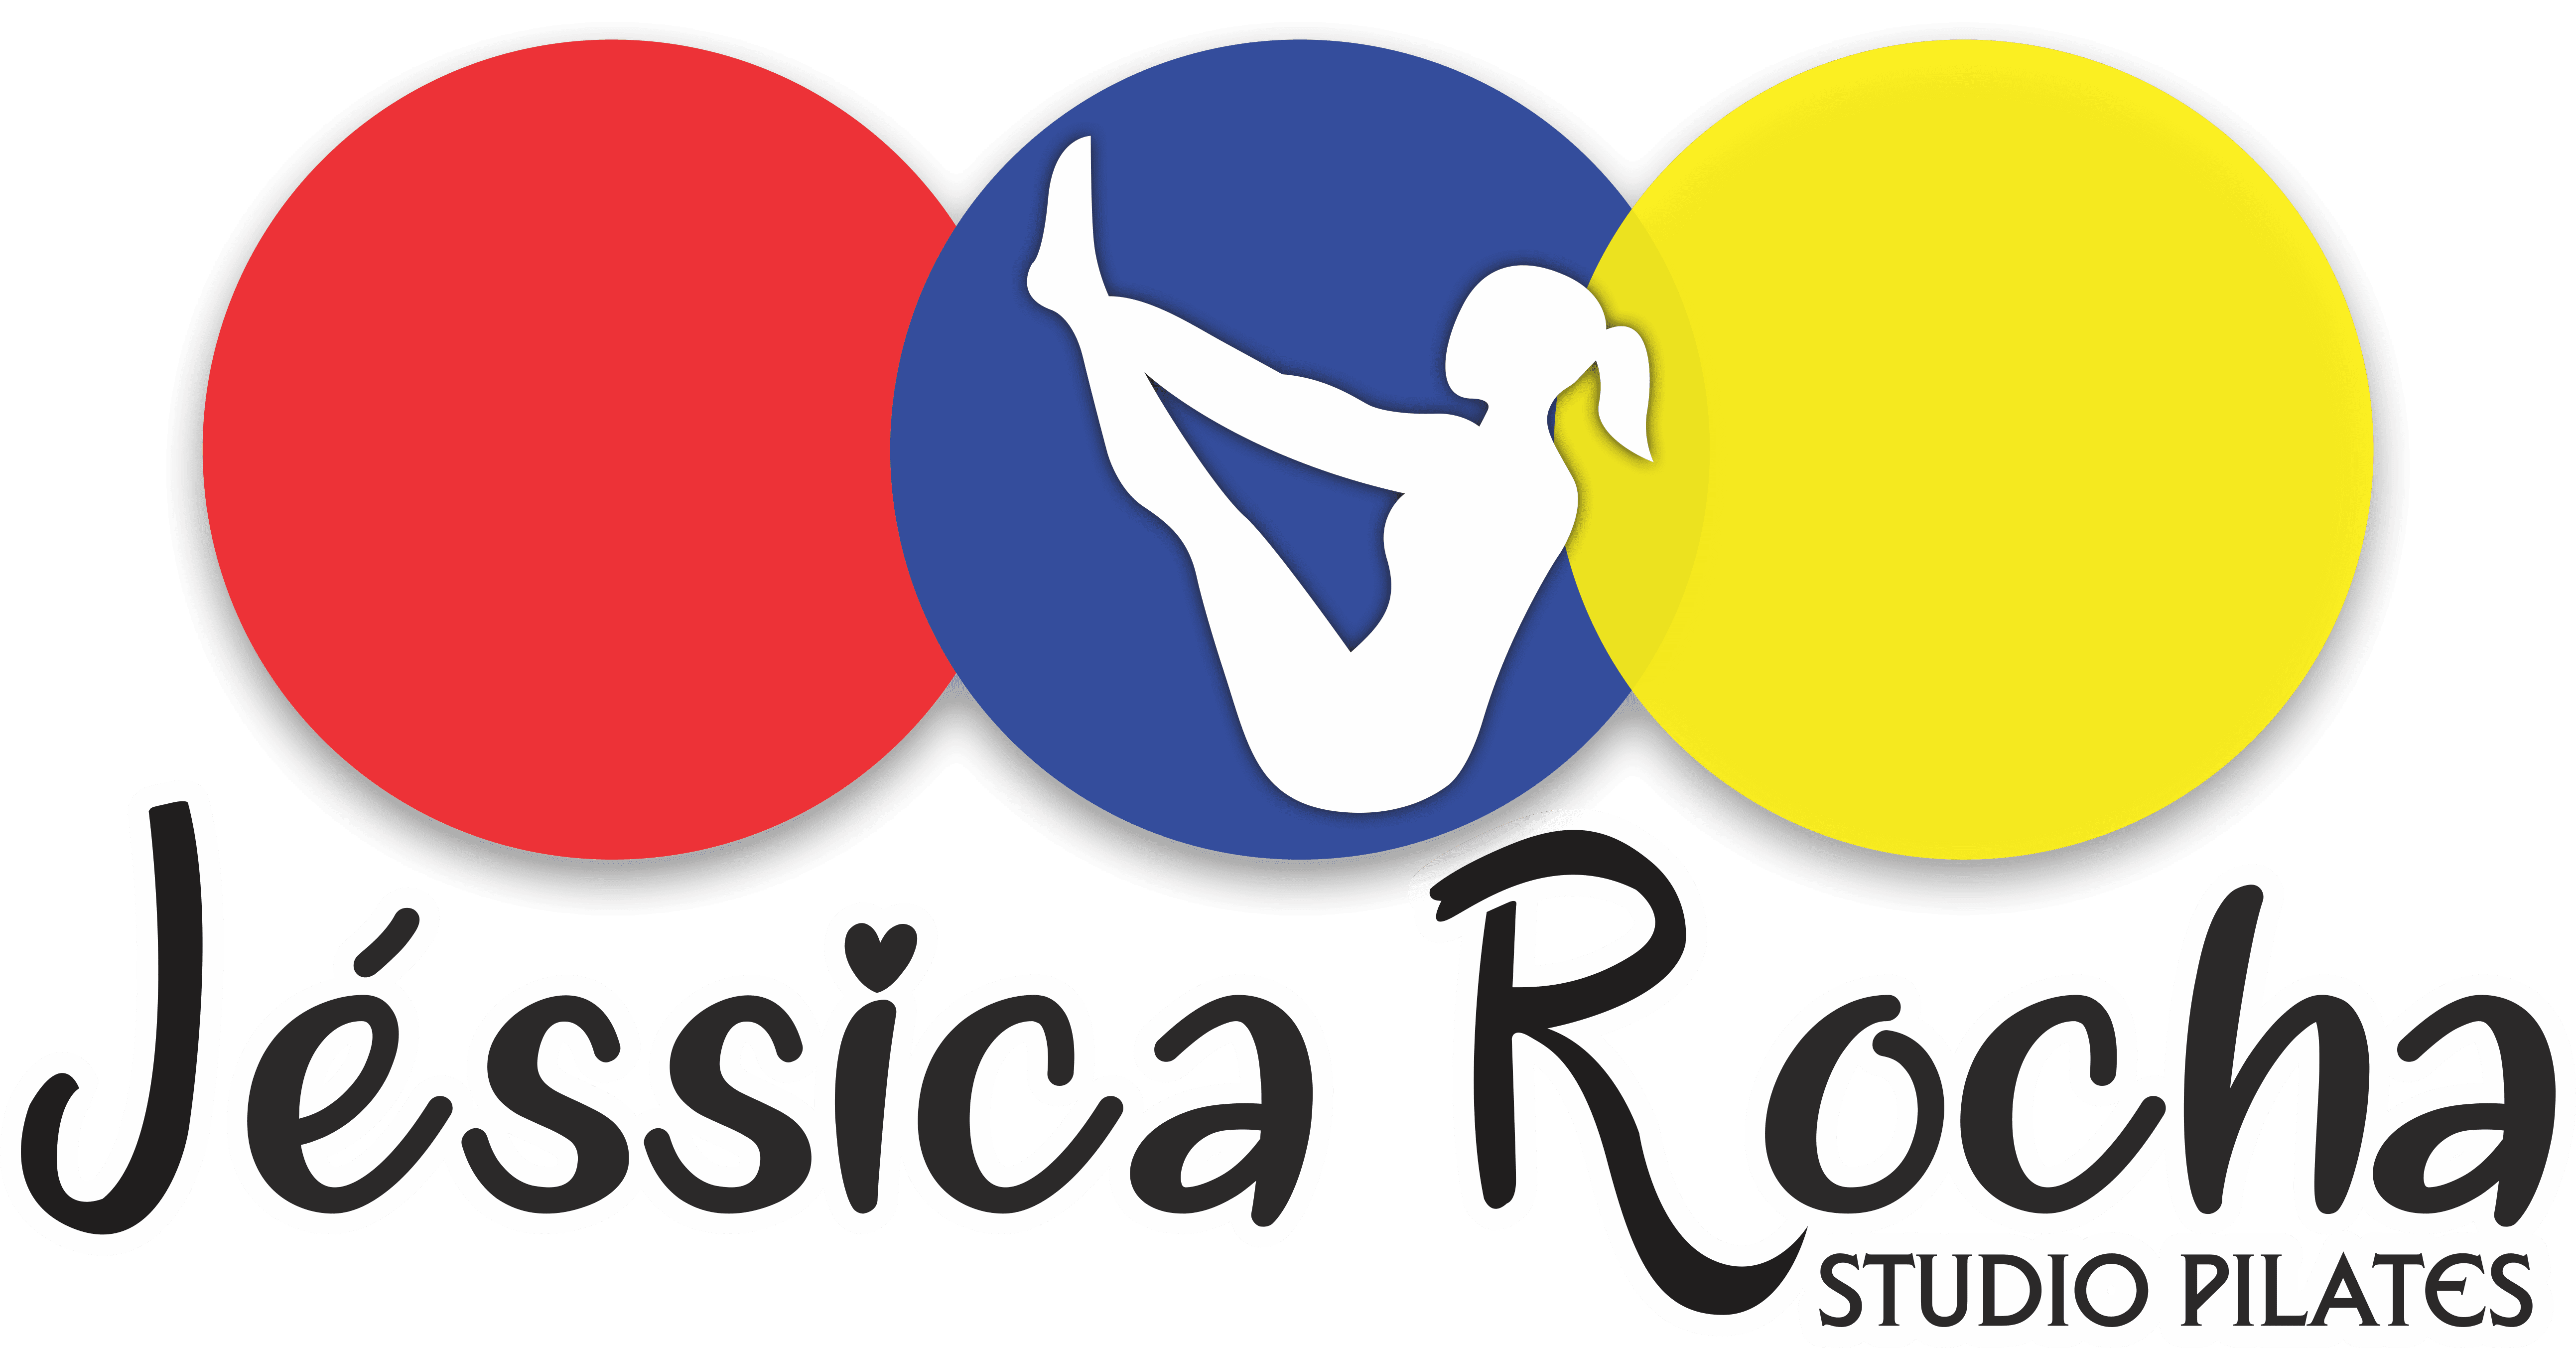 Jéssica Rocha Studio Pilates